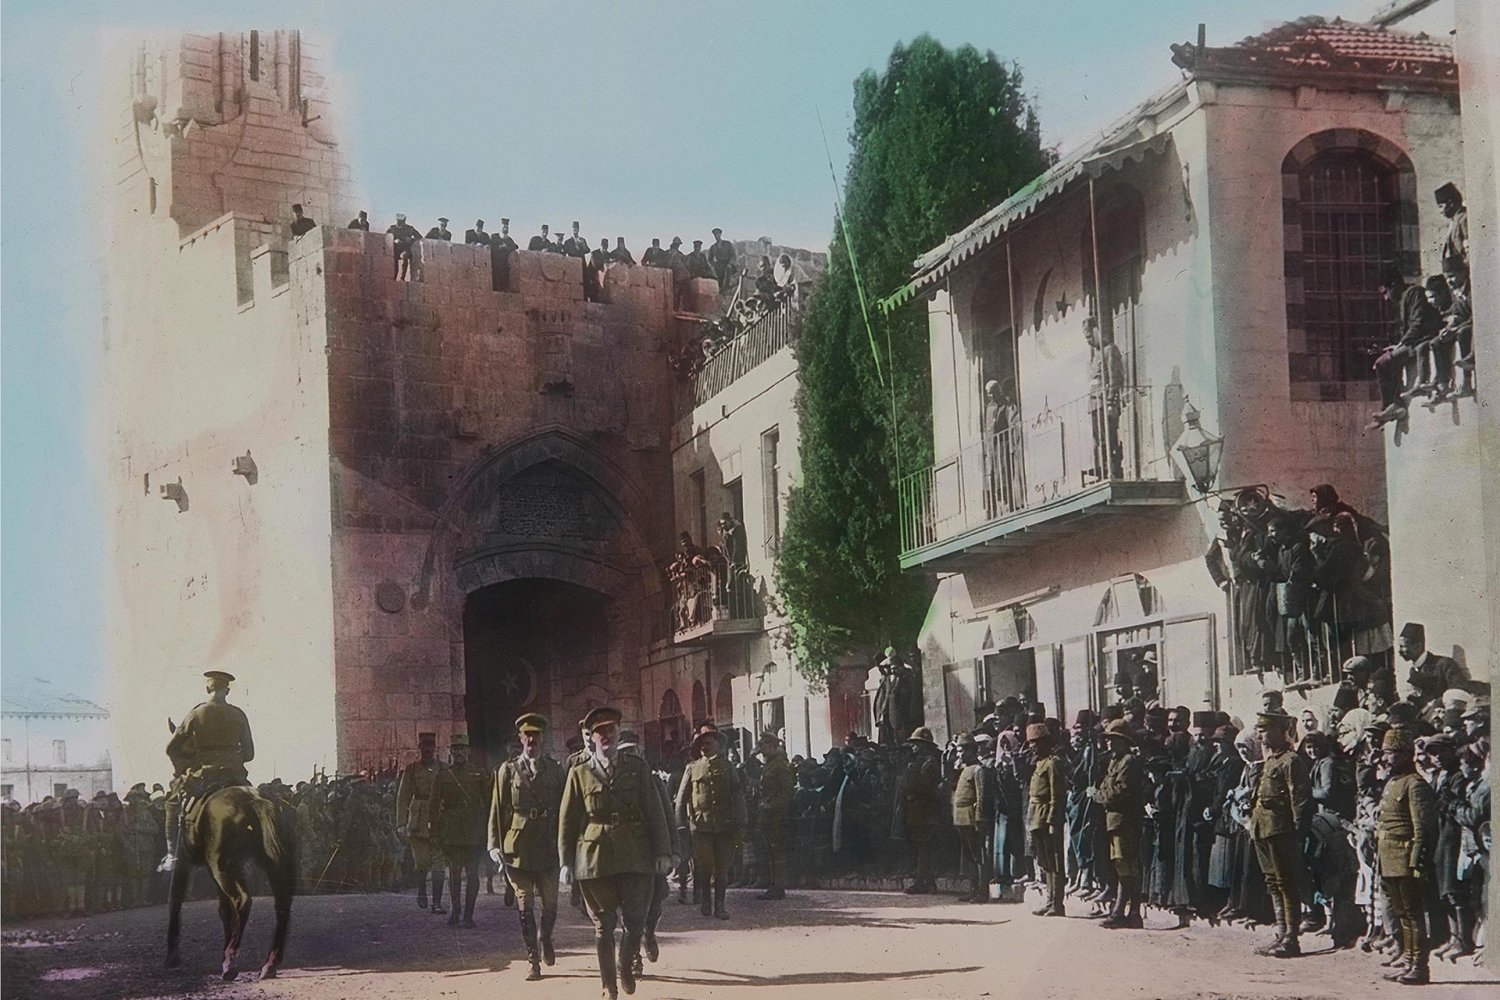 British General Edmund Allenby enters Jerusalem's Old City through Jaffa Gate, marking British victory over the Ottoman empire in 1917. 